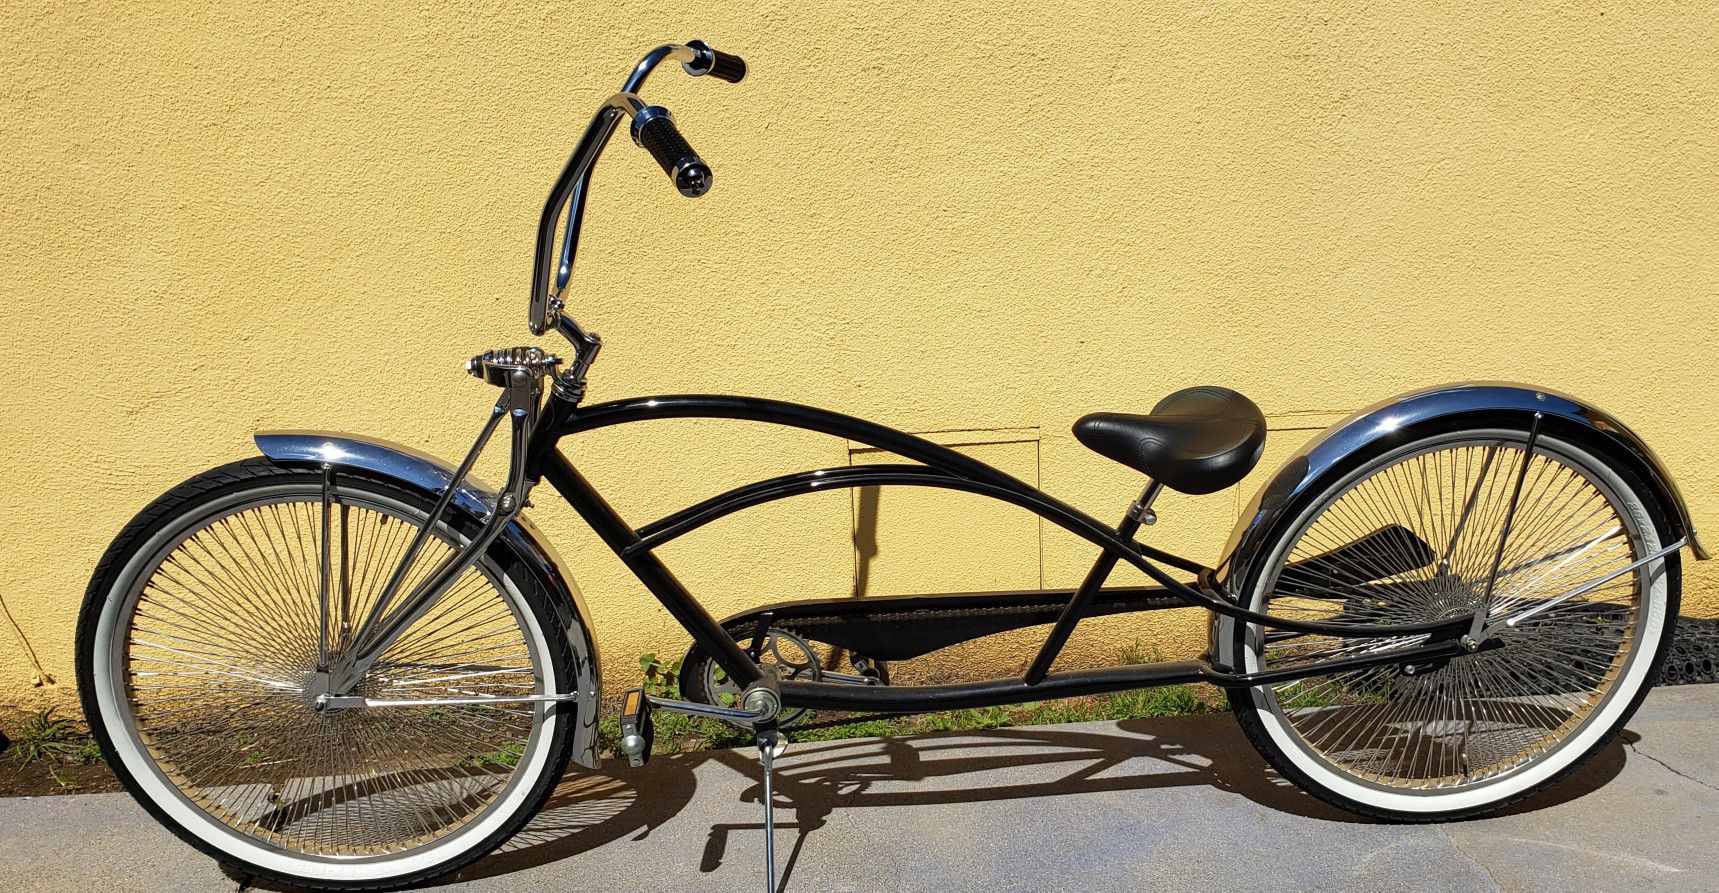 Stretched Limo Bike